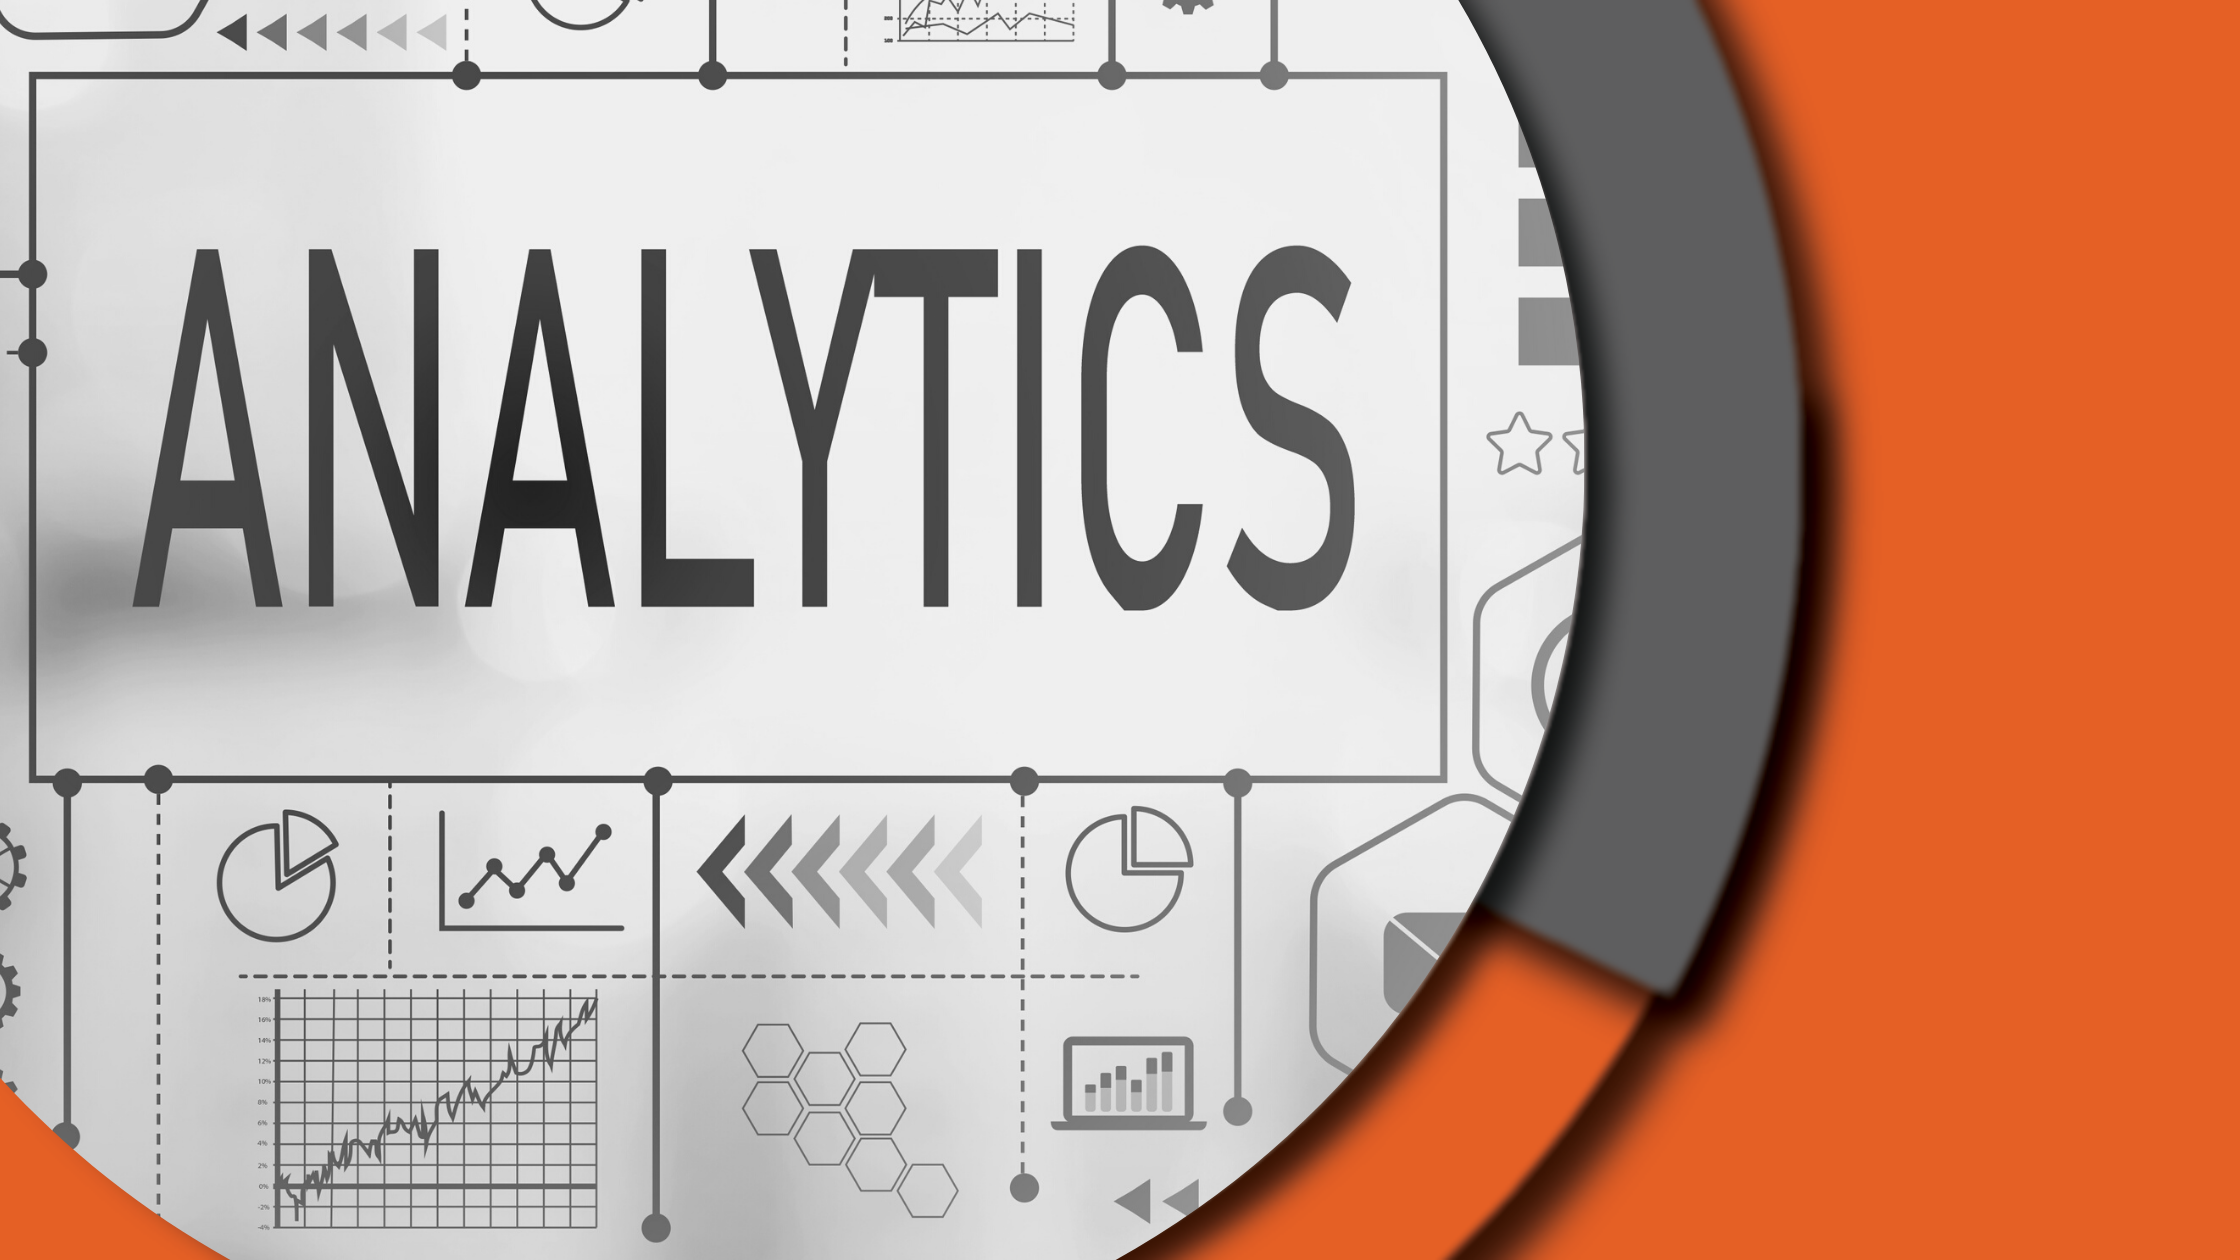 Analytics skills in black and white wording on an orange background.